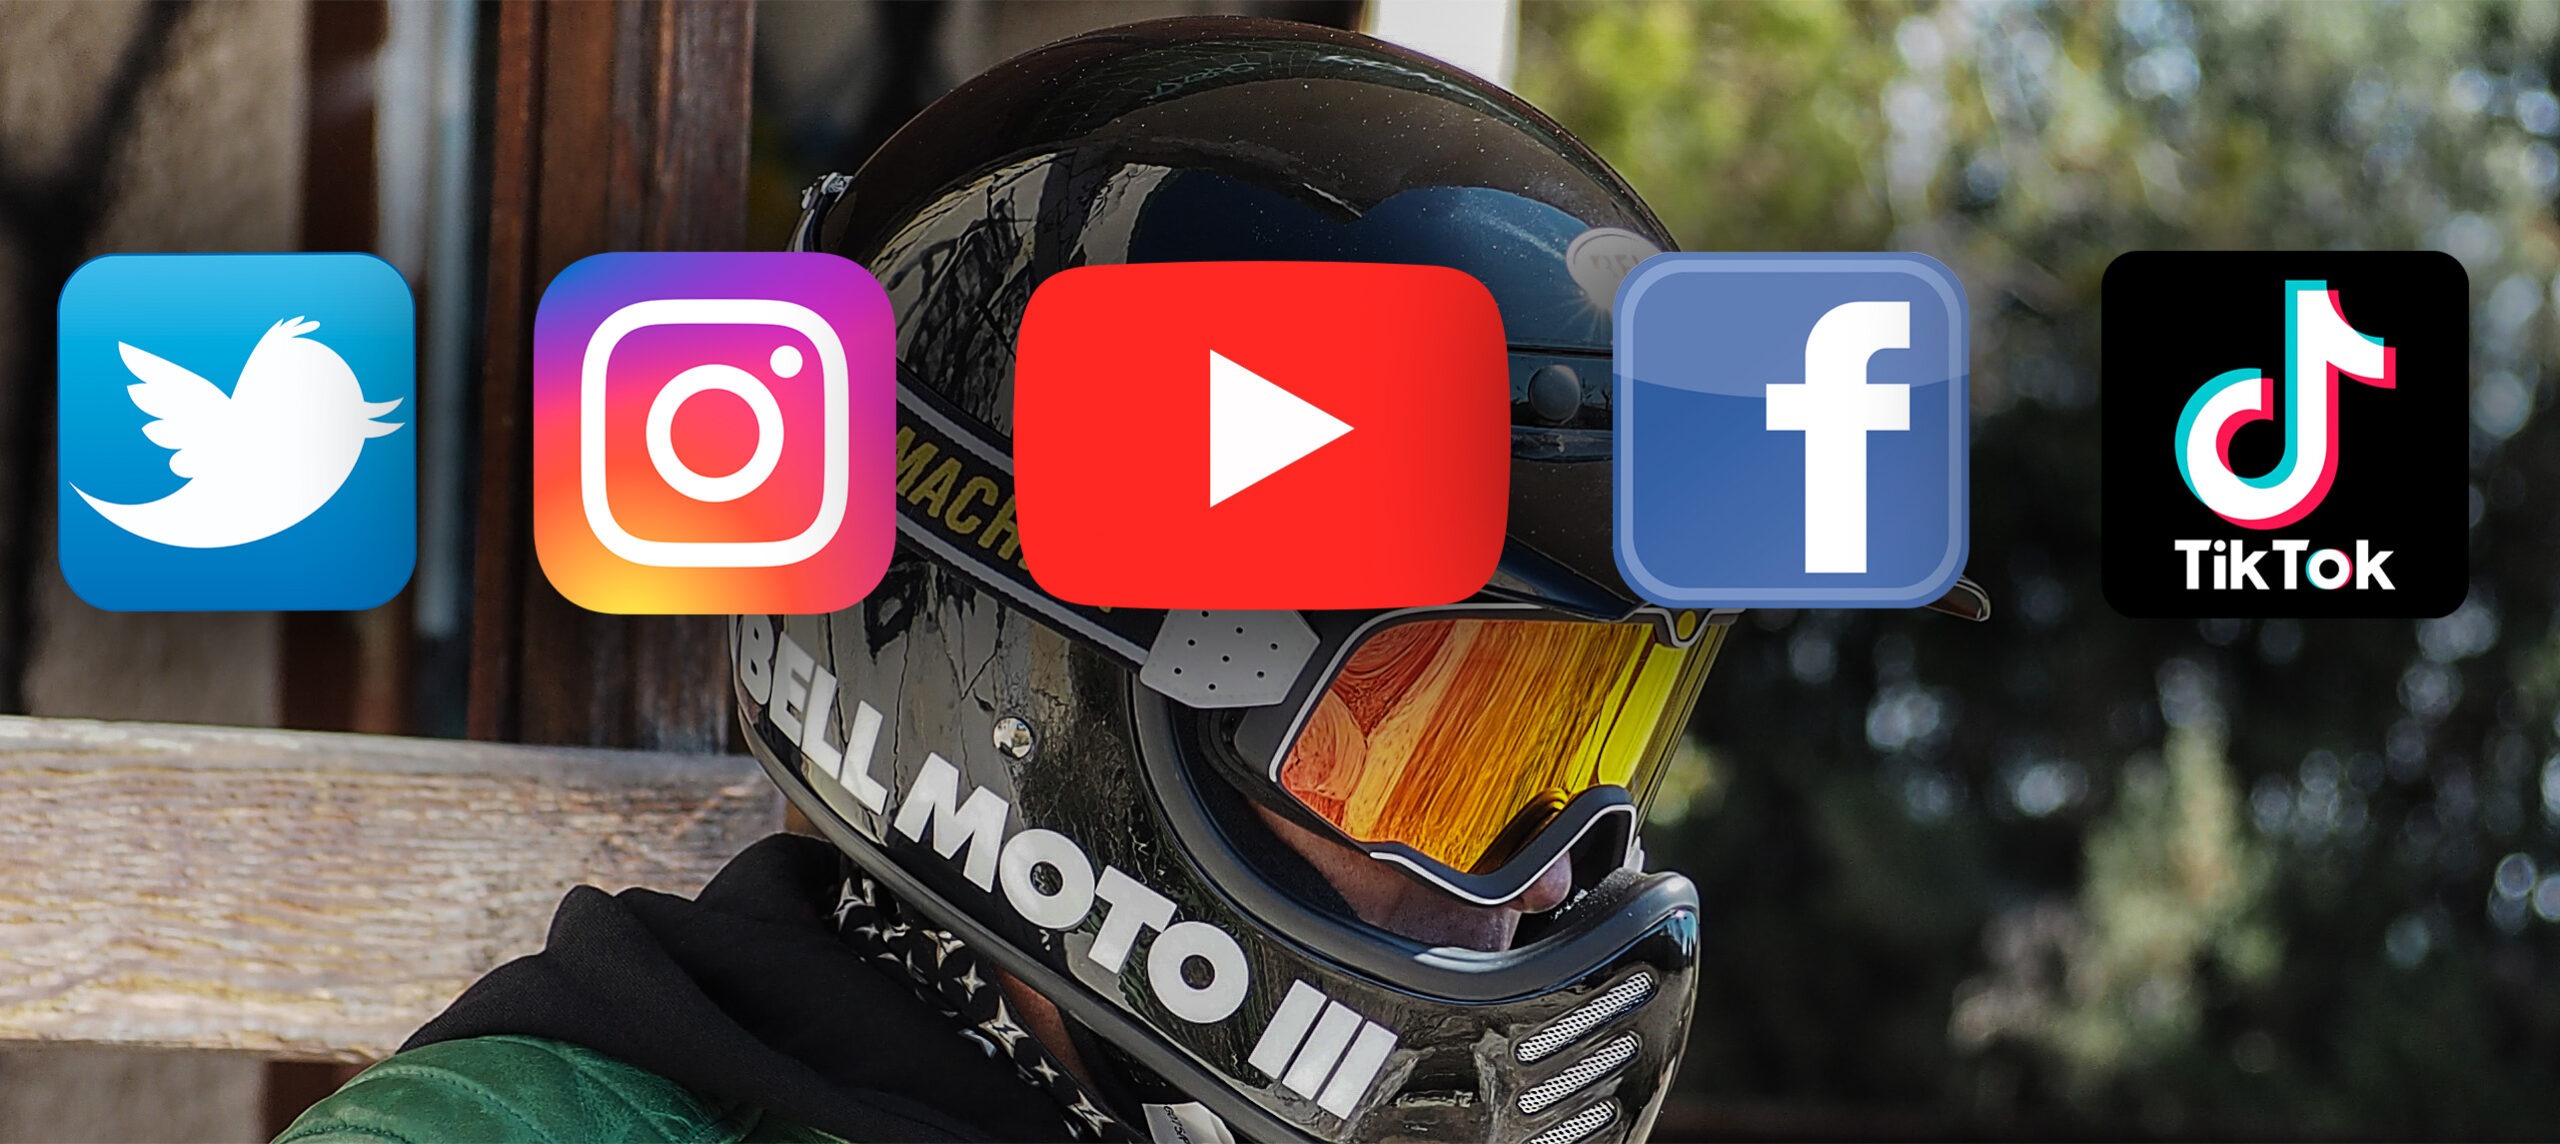 Logotipos de redes sociales sobre colaborador influencer moto